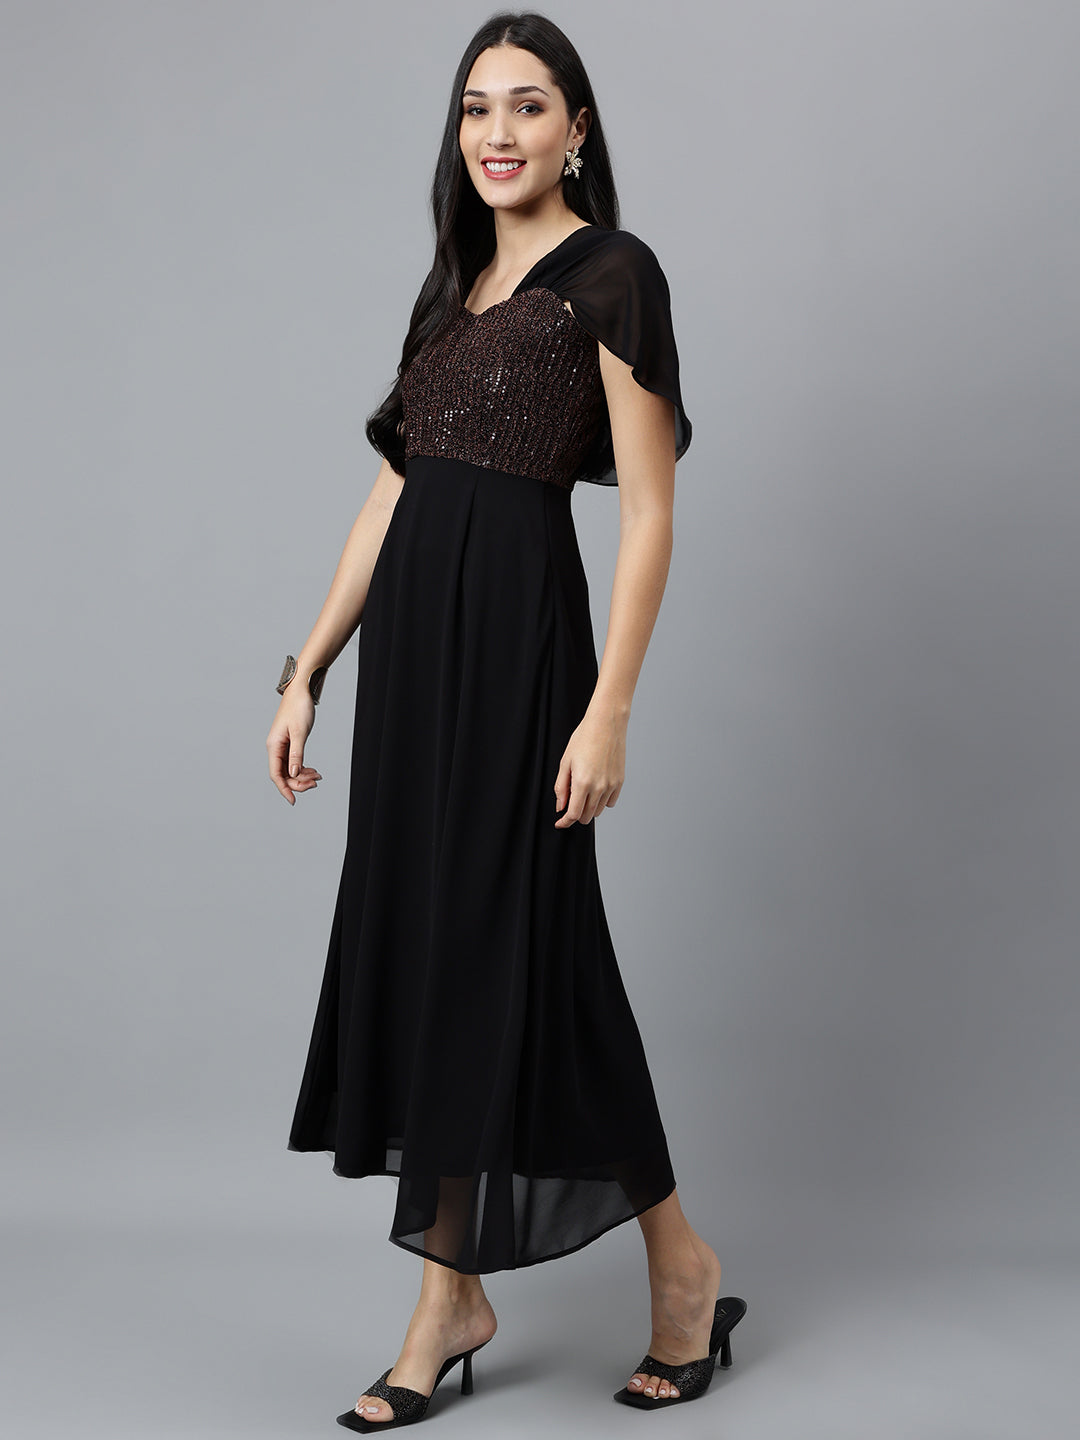 Black Solid Half Sleeve Party Maxi Dress